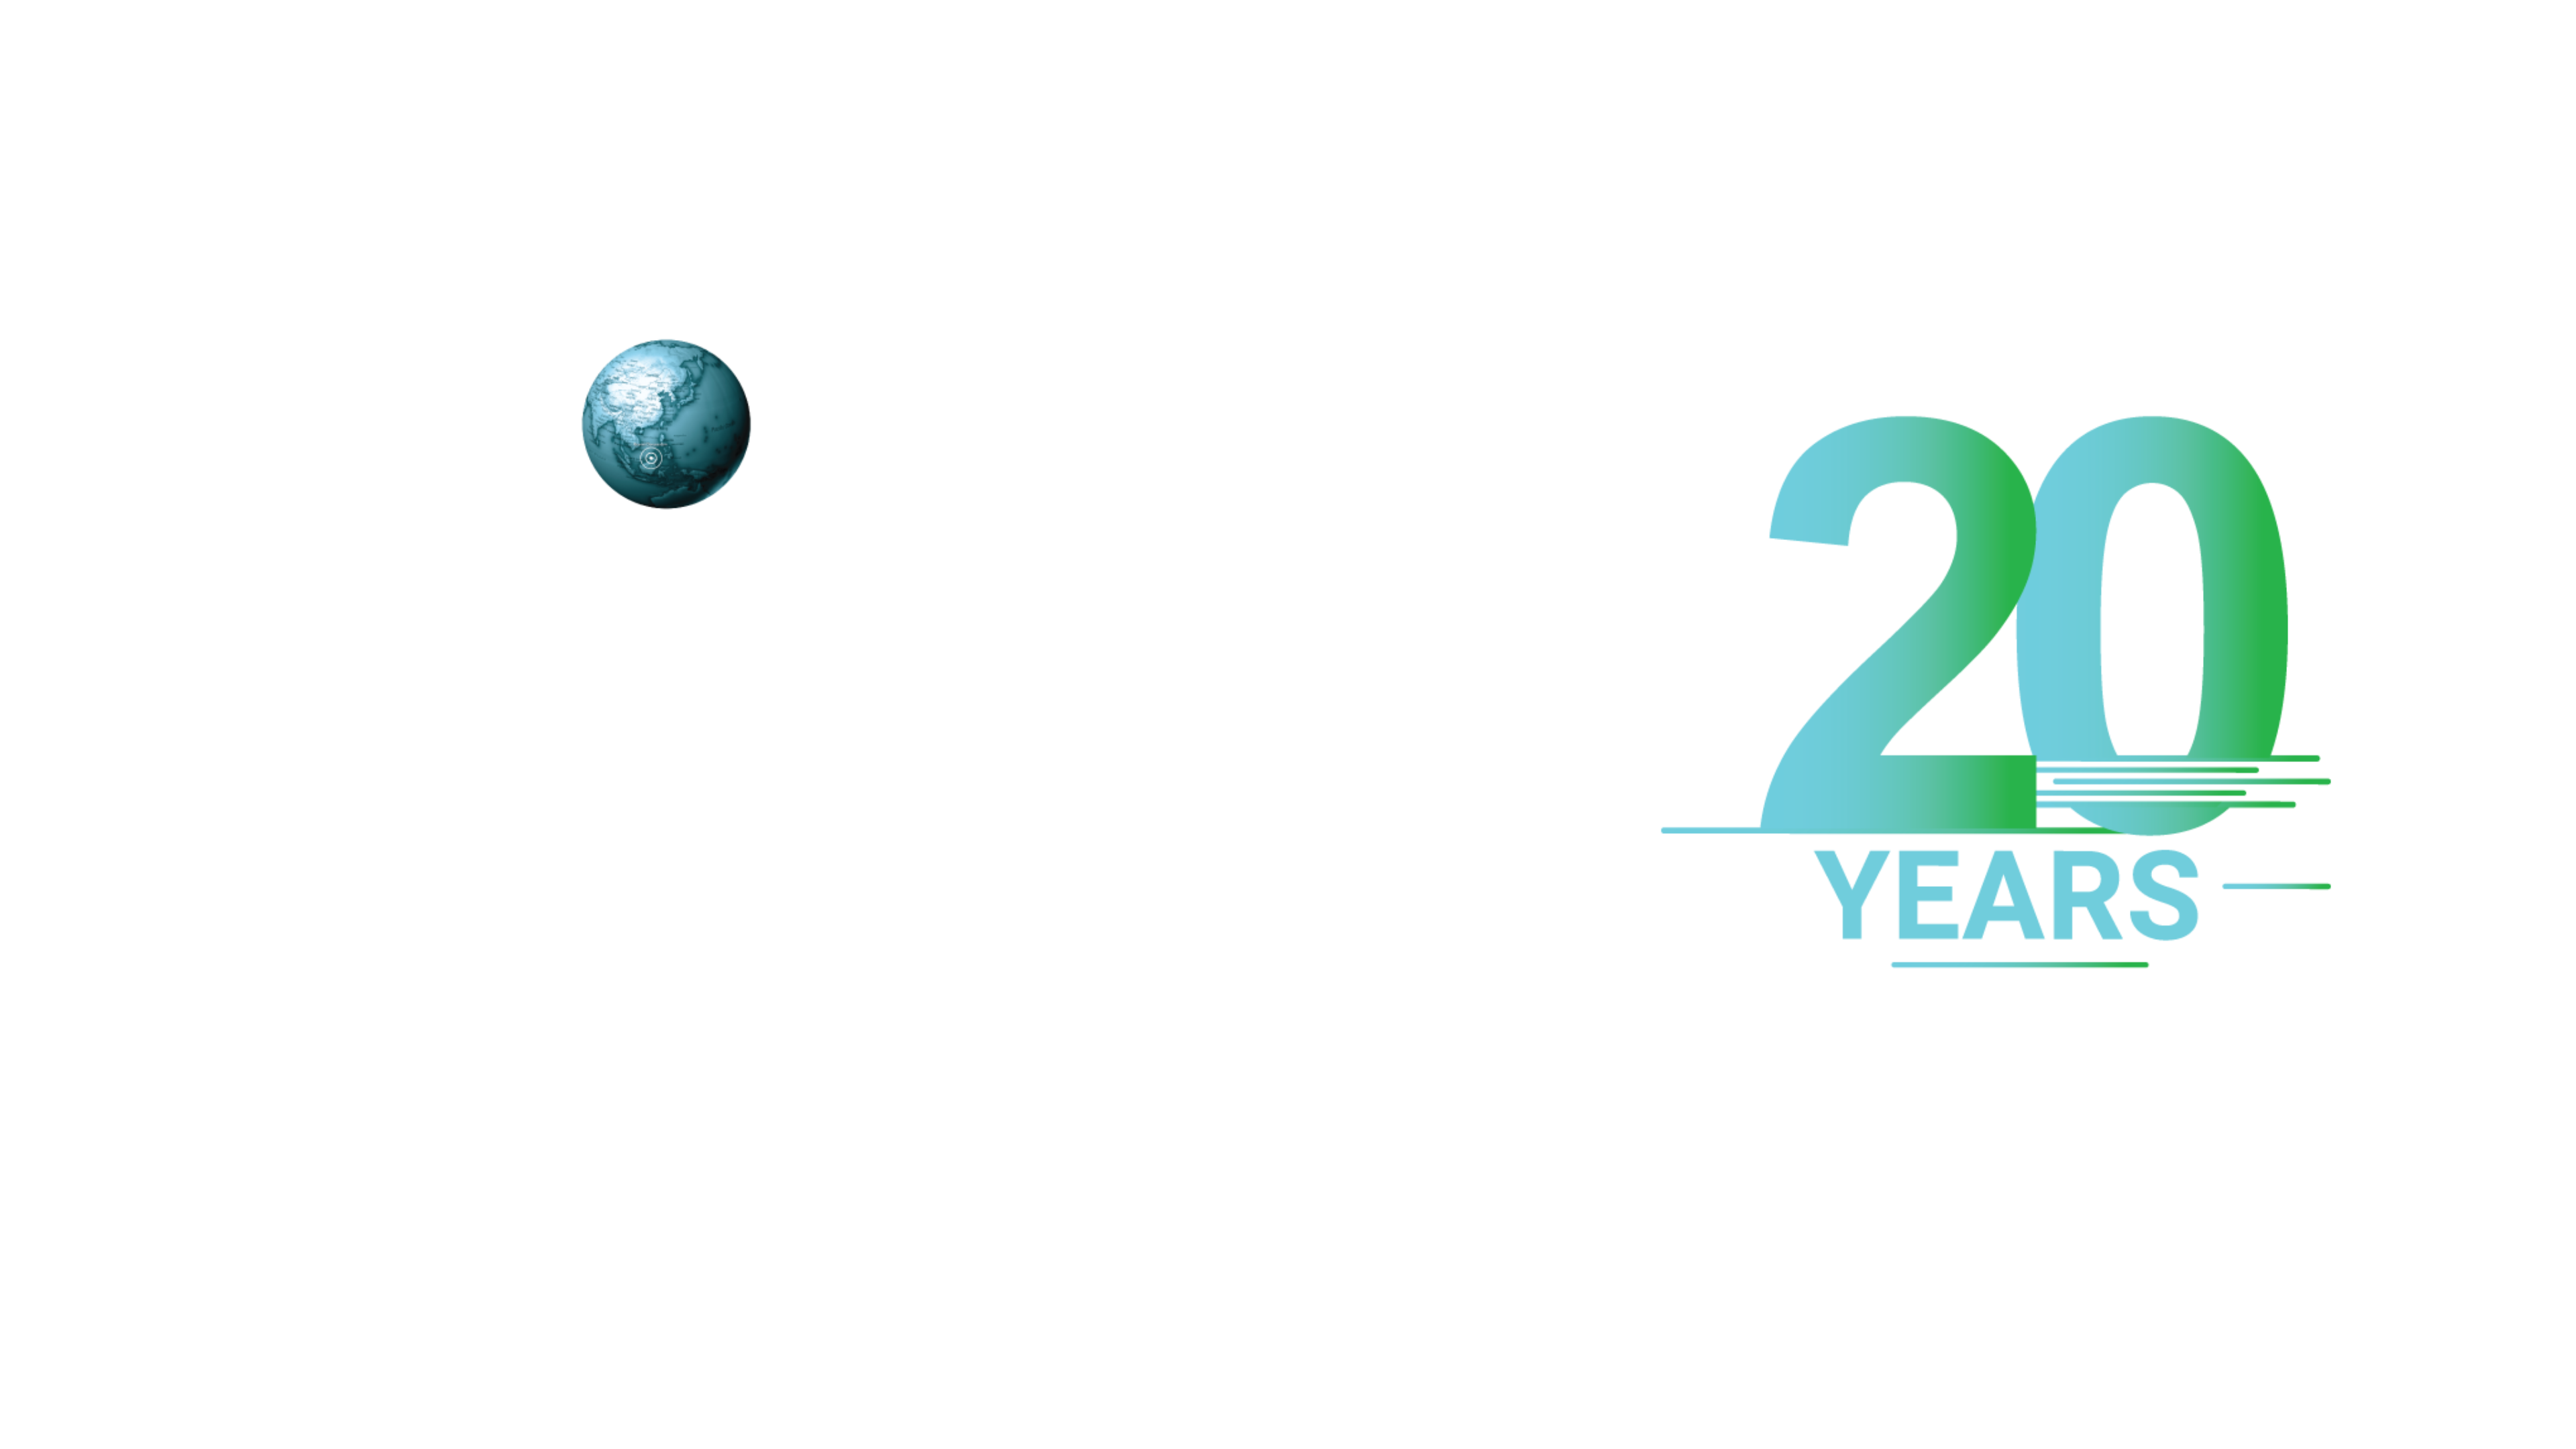 BICTA 2020